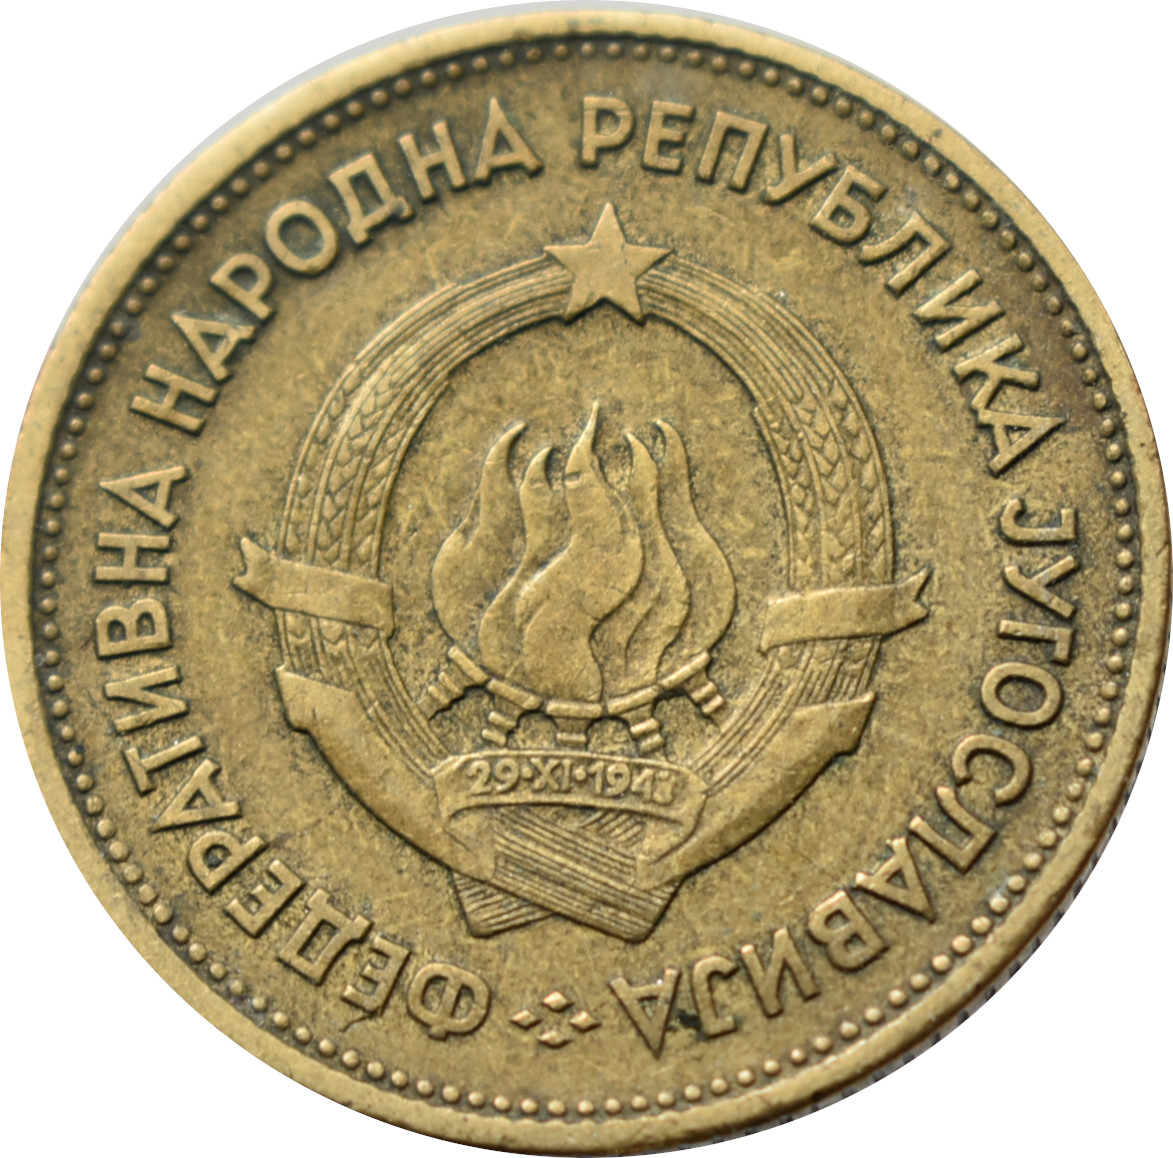 Juhoslávia 20 Dinara 1955